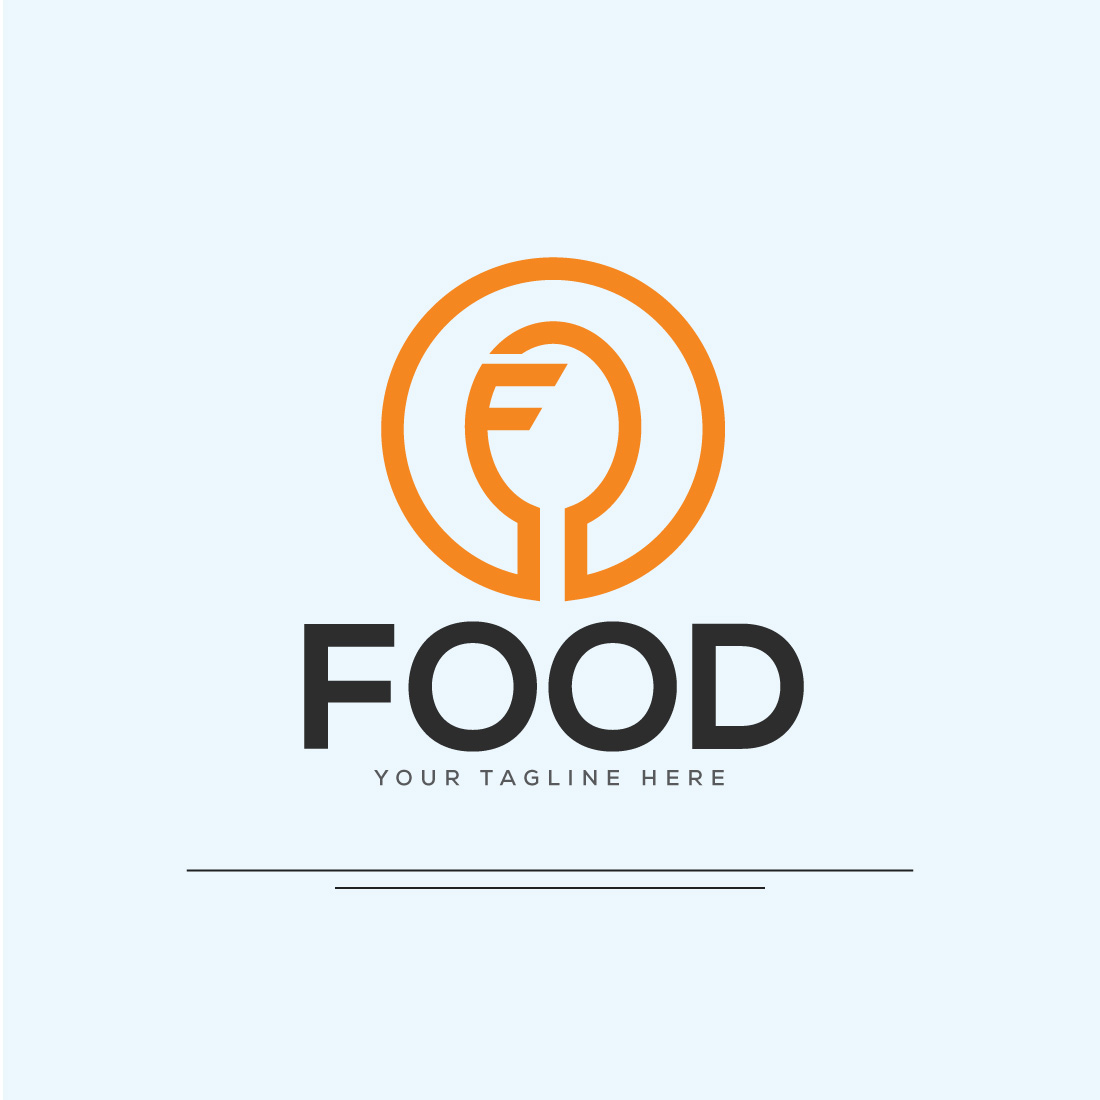 Letter F - Food Logo cover image.